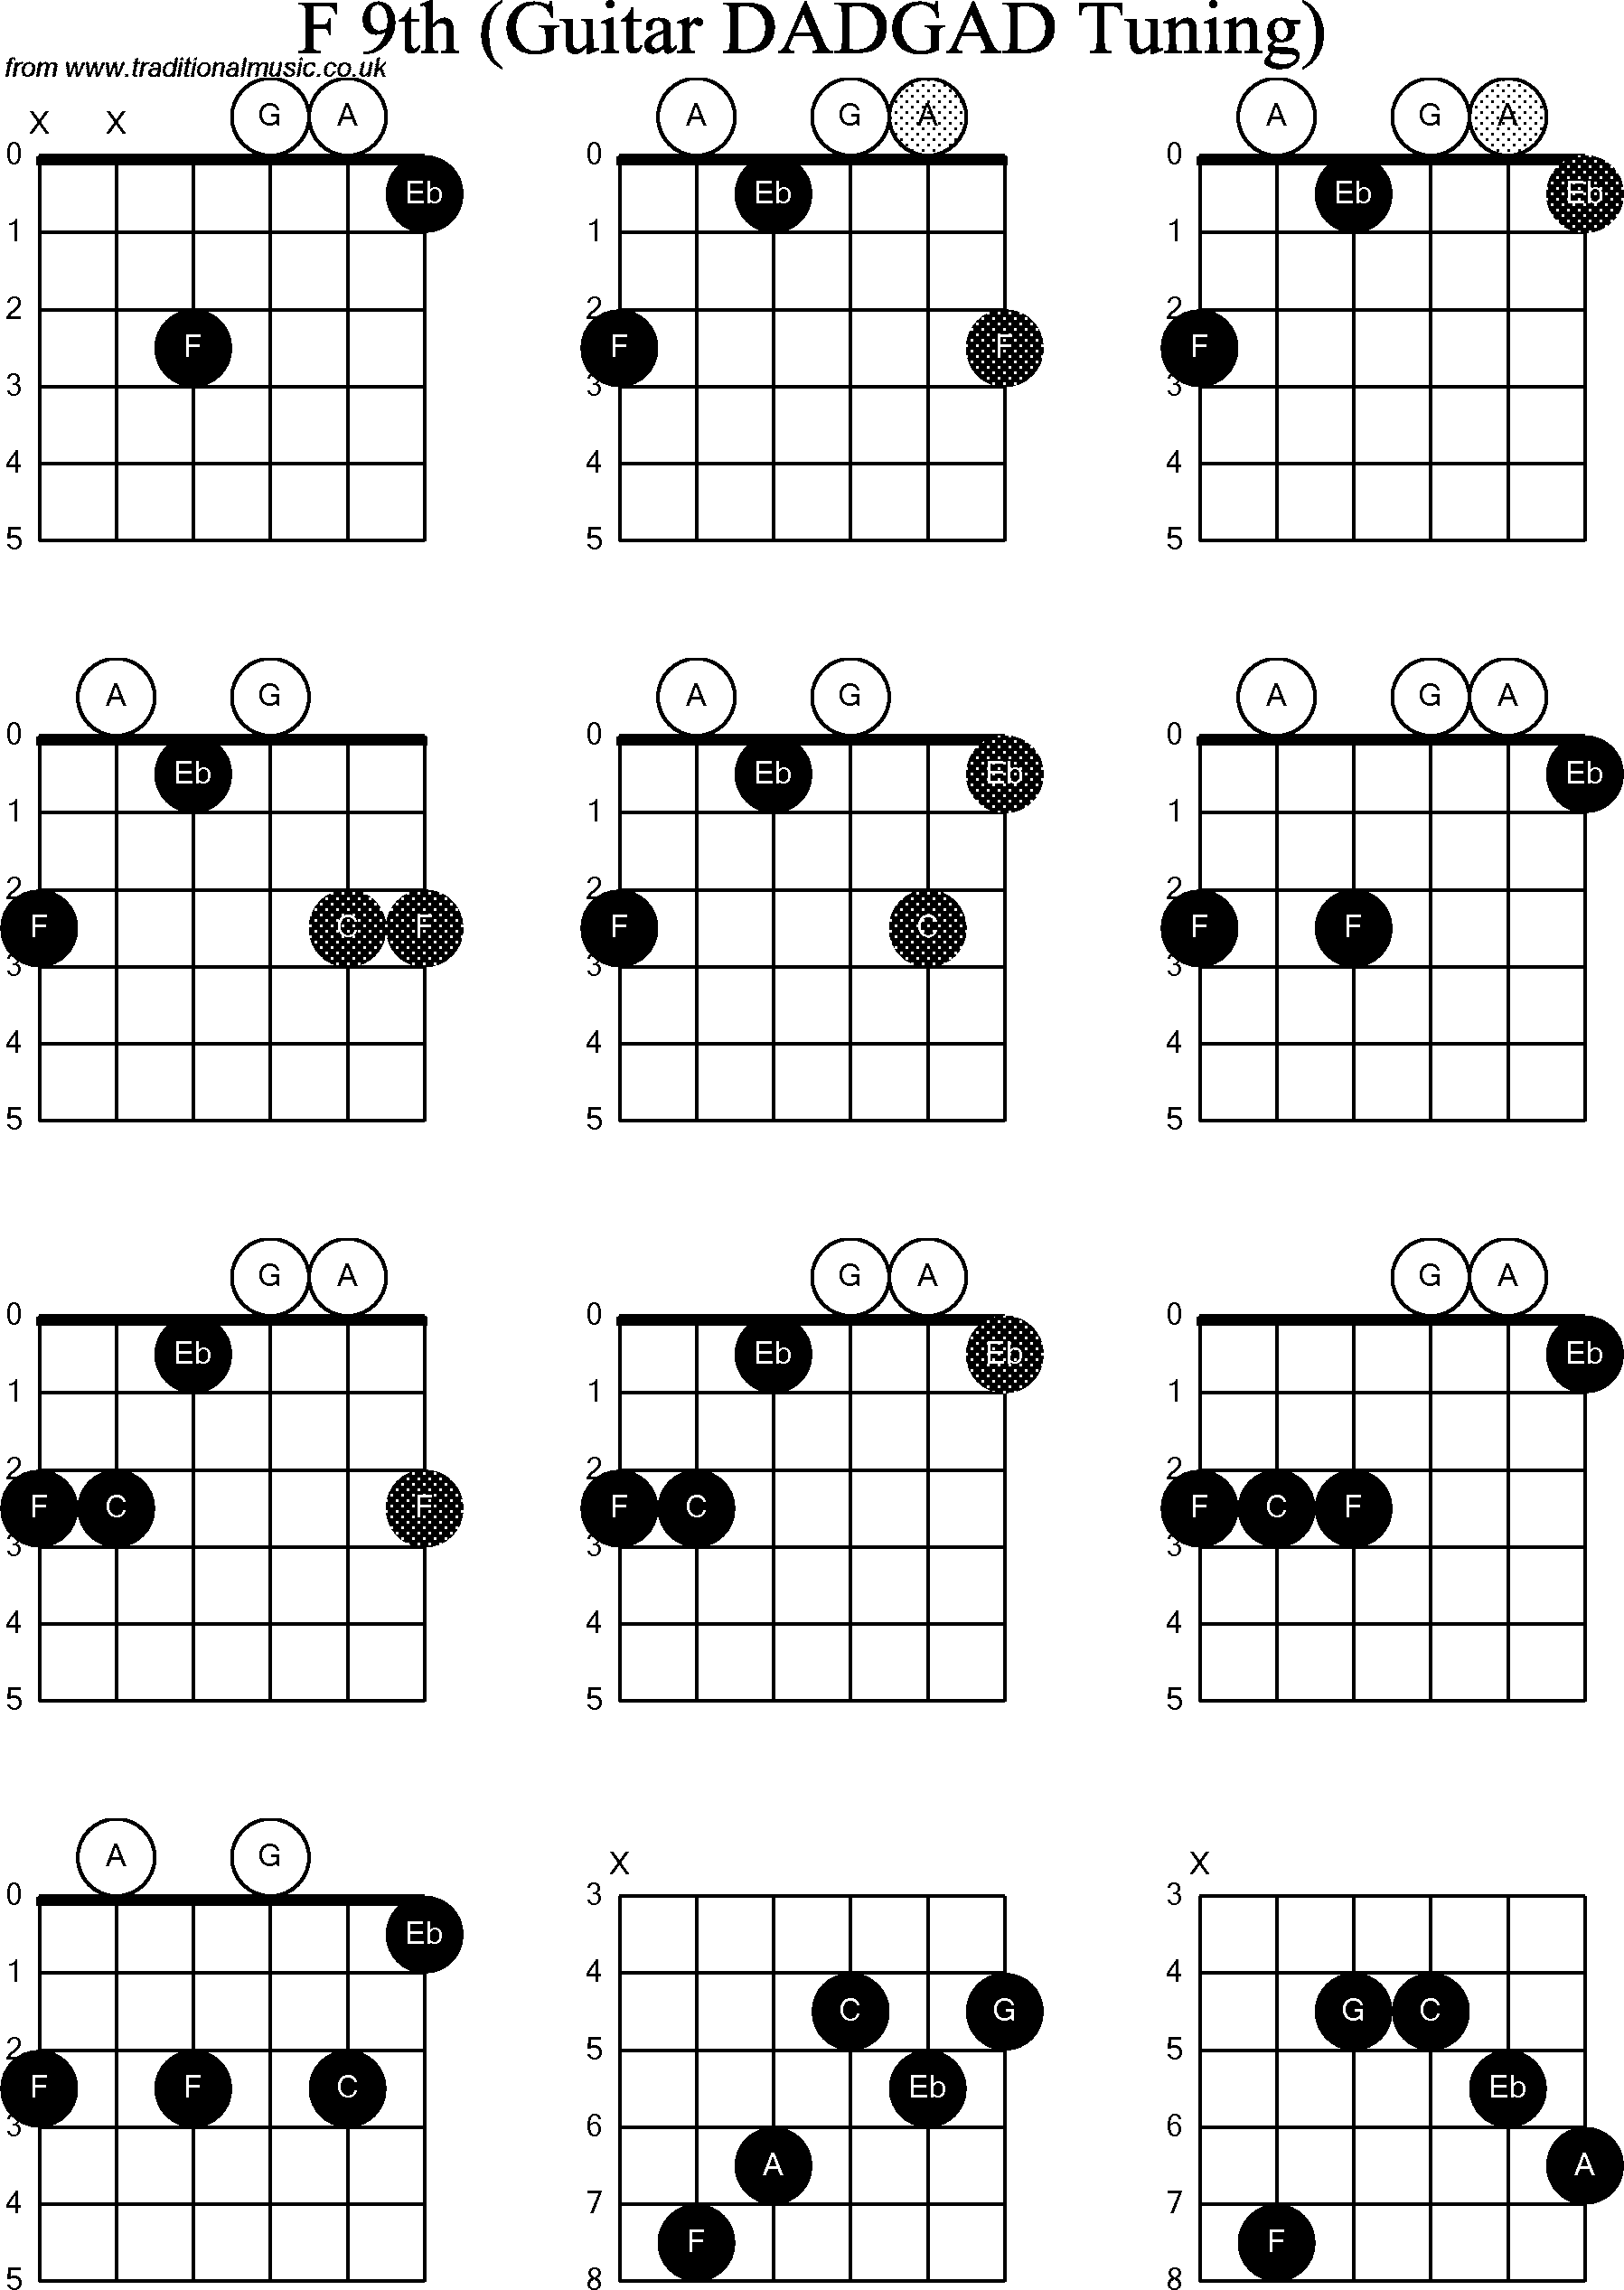 Chord Diagrams for D Modal Guitar(DADGAD), F9th